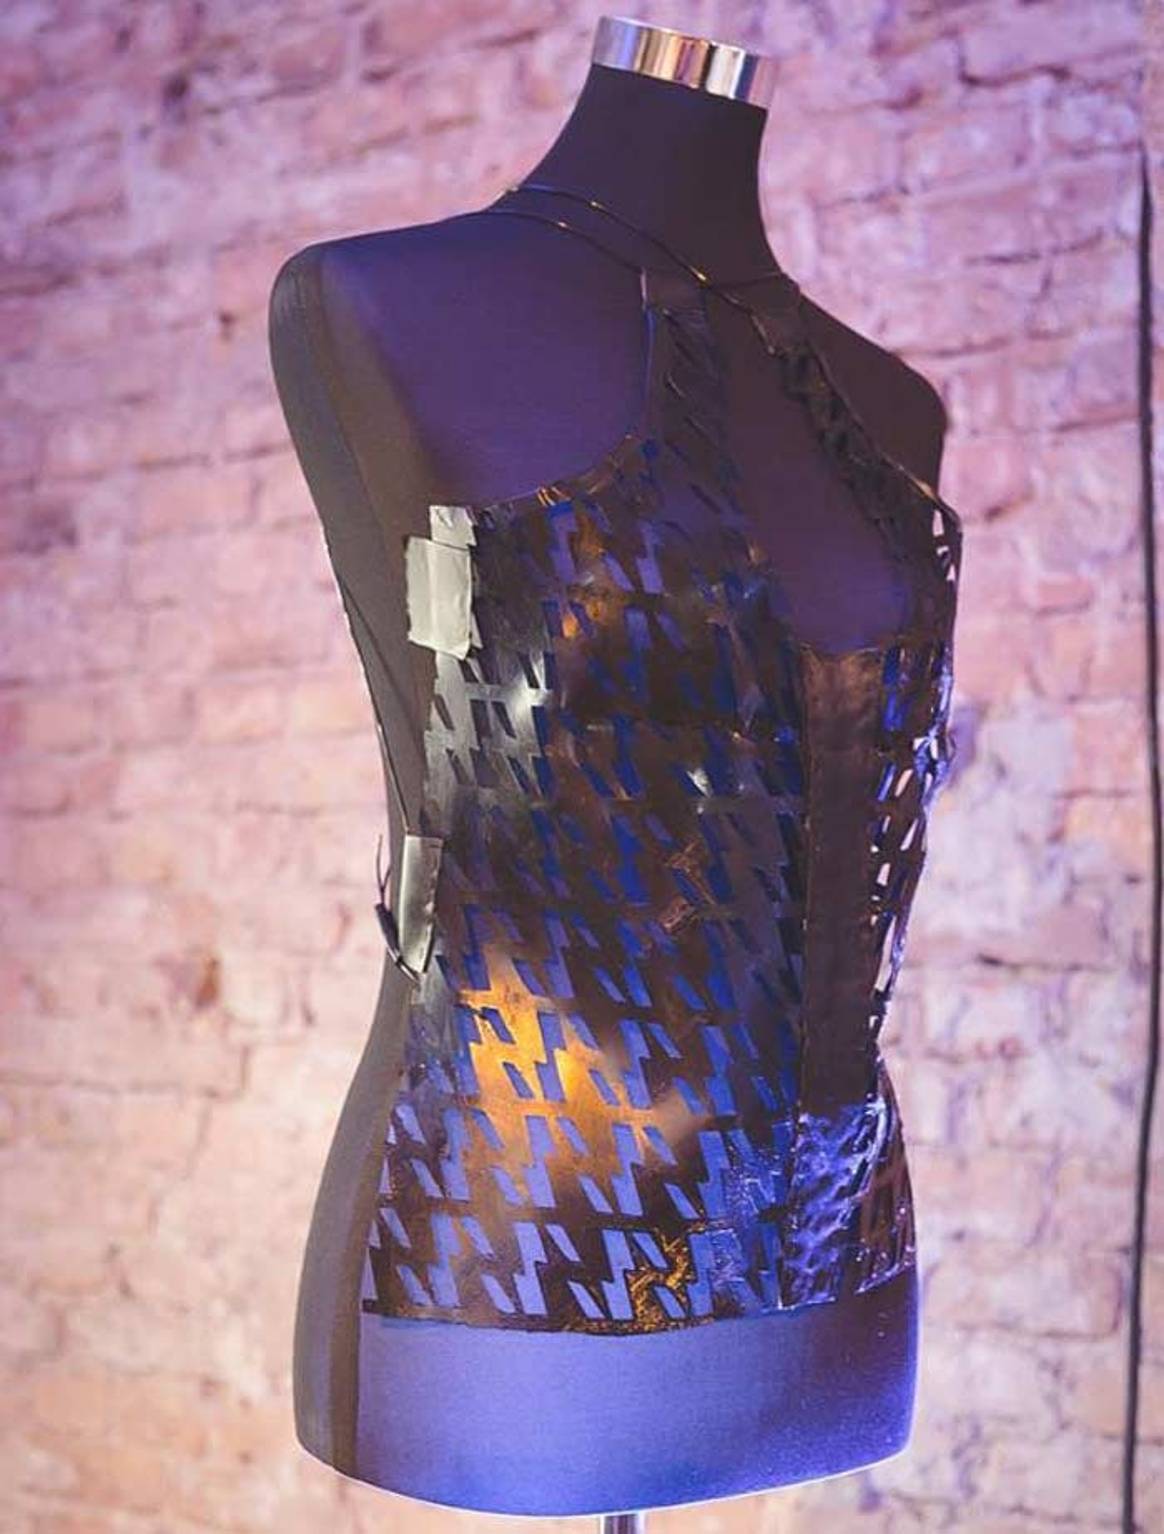 FashionTech Berlin: slimme kleding en luxe design uit de 3D-printer